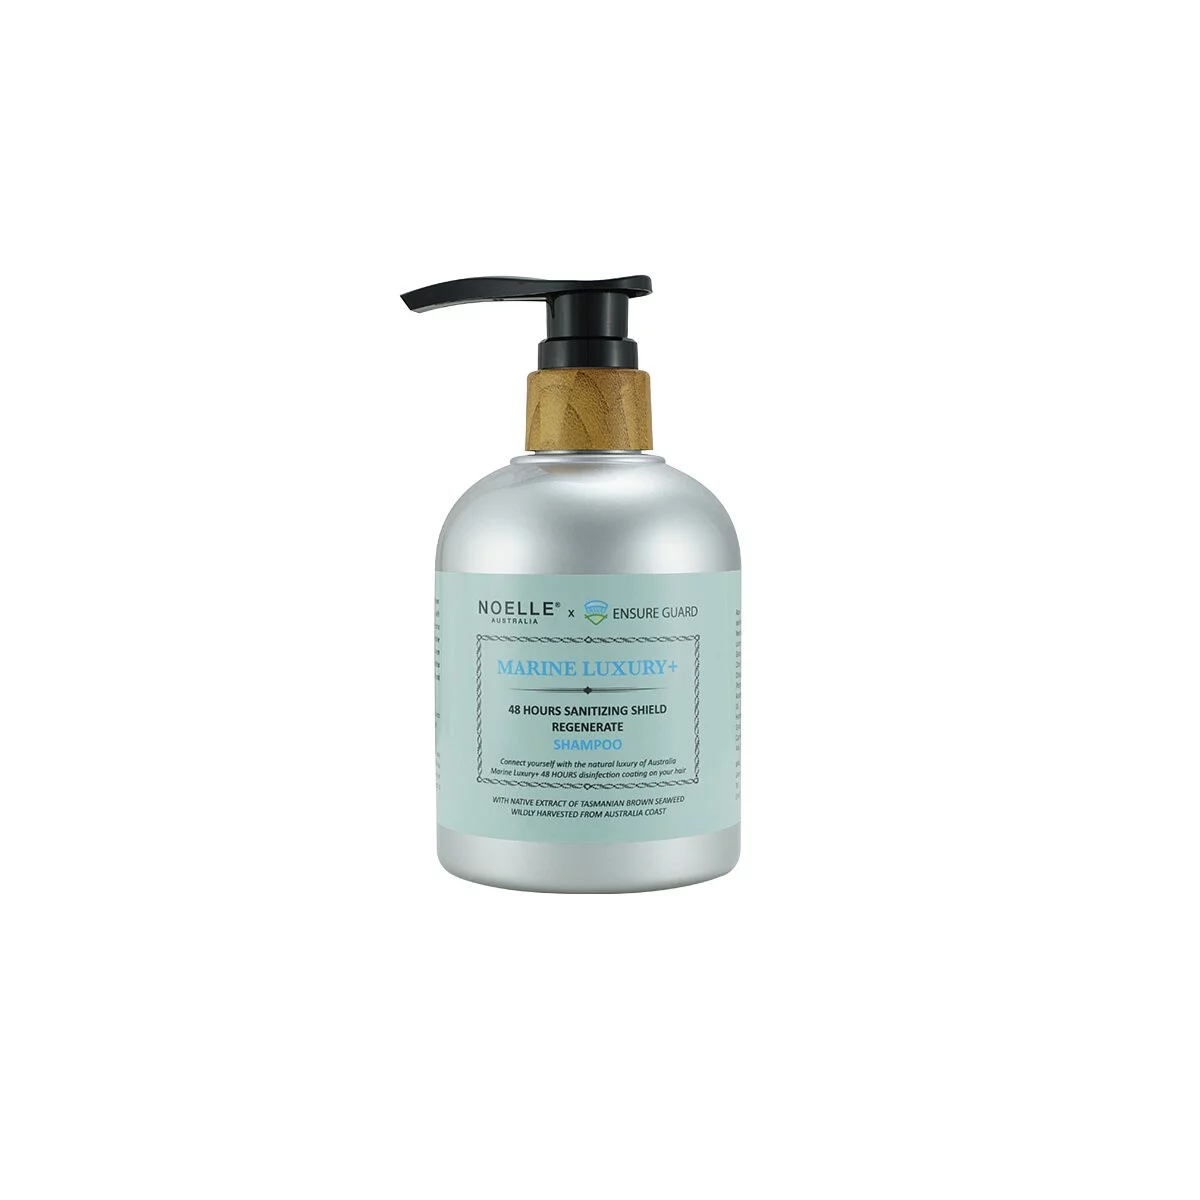 Ensure Guard Marine Luxury+ 48 Hours Shield Regenerate Shampoo 300ml